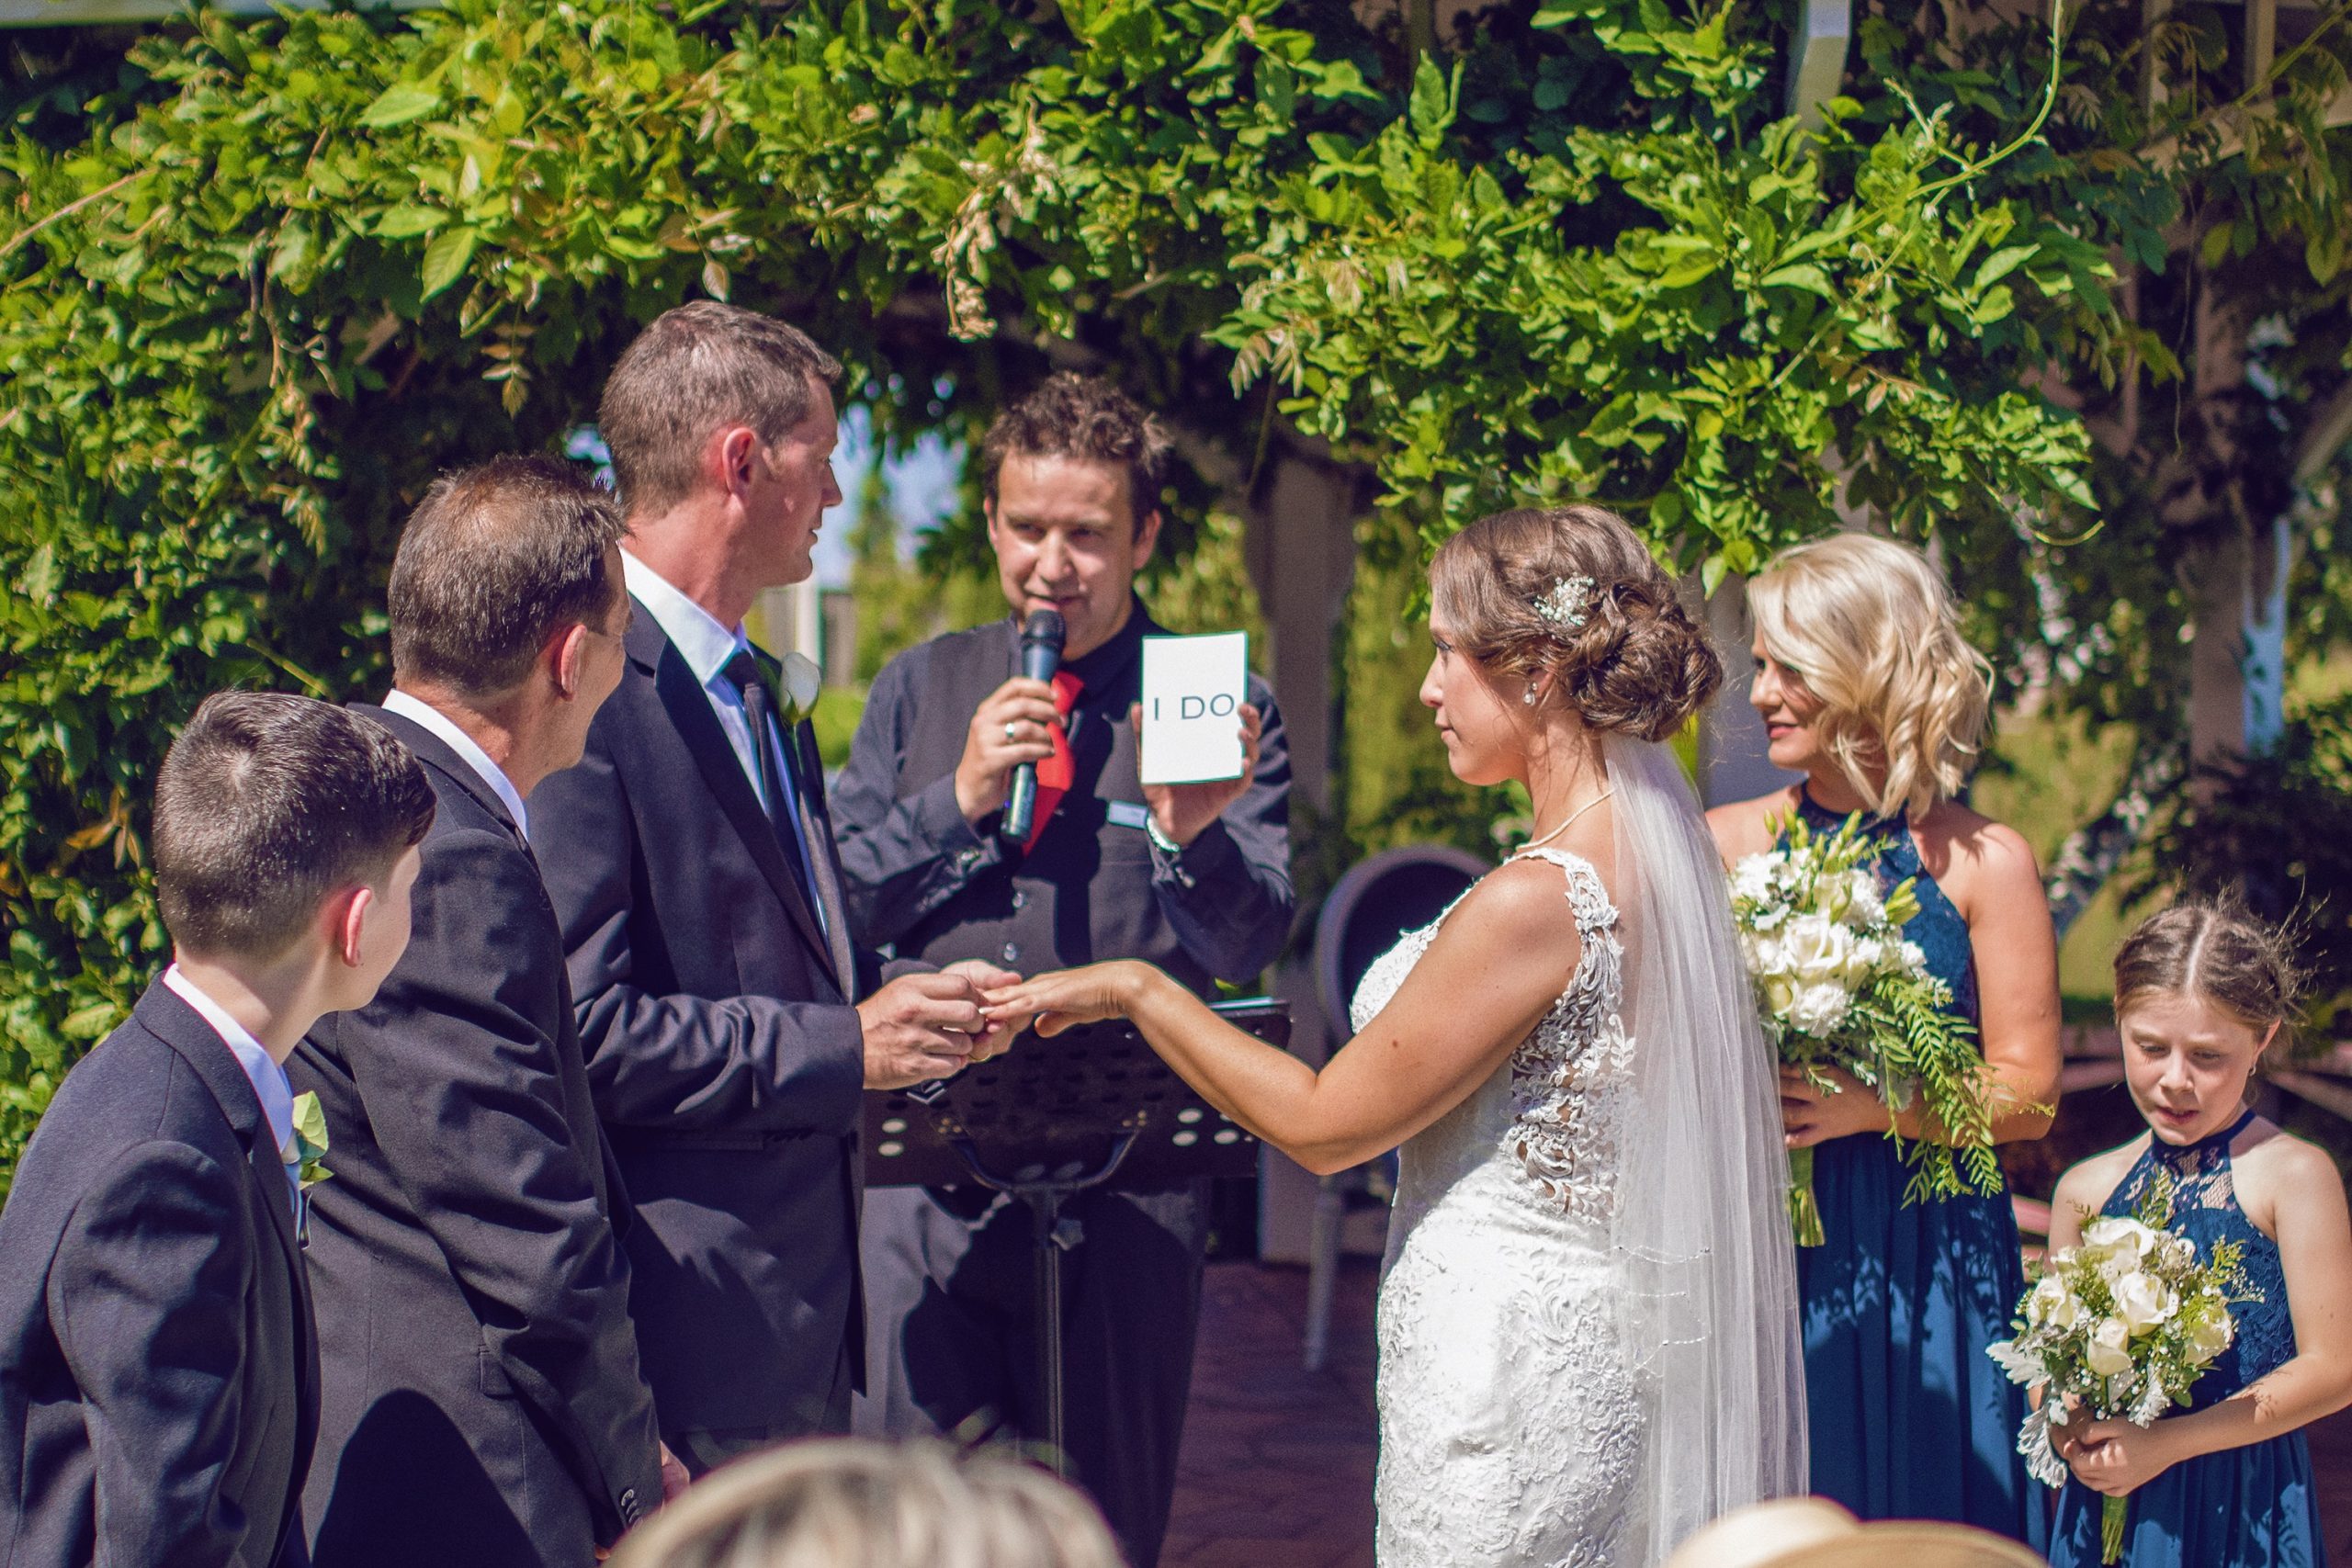 Weddings by Jay Allen – Marriage Celebrant & Wedding DJ/MC